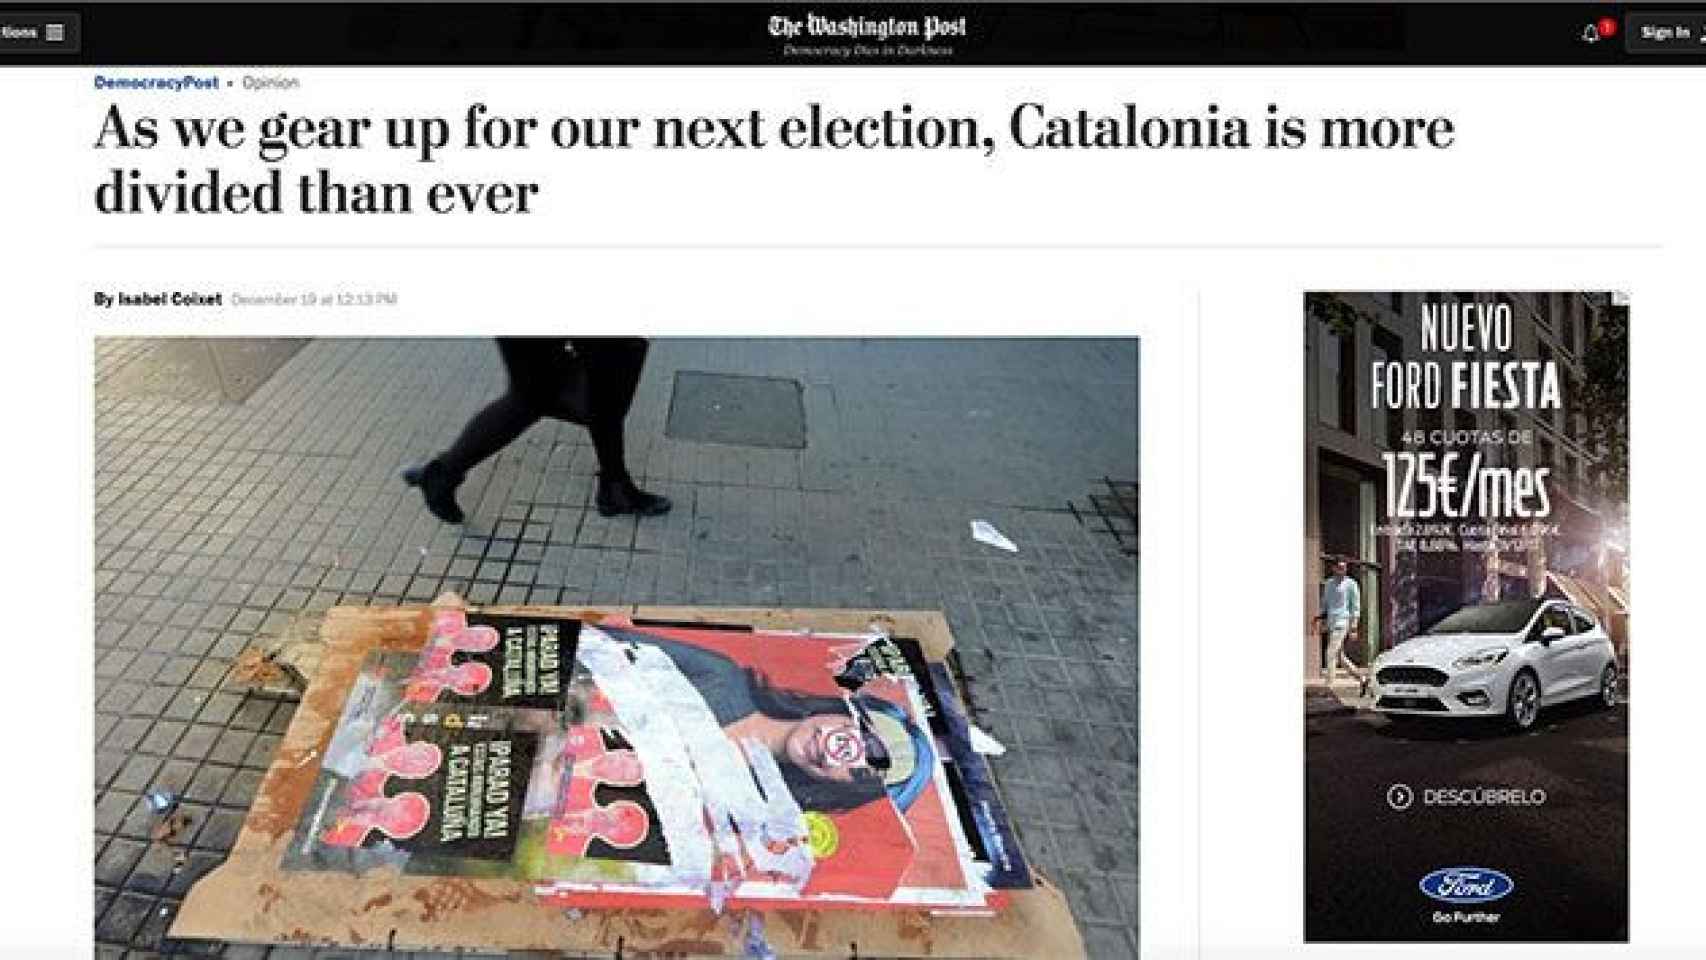 Coixet denuncia en 'The Washington Post' que Cataluña está más dividida que nunca